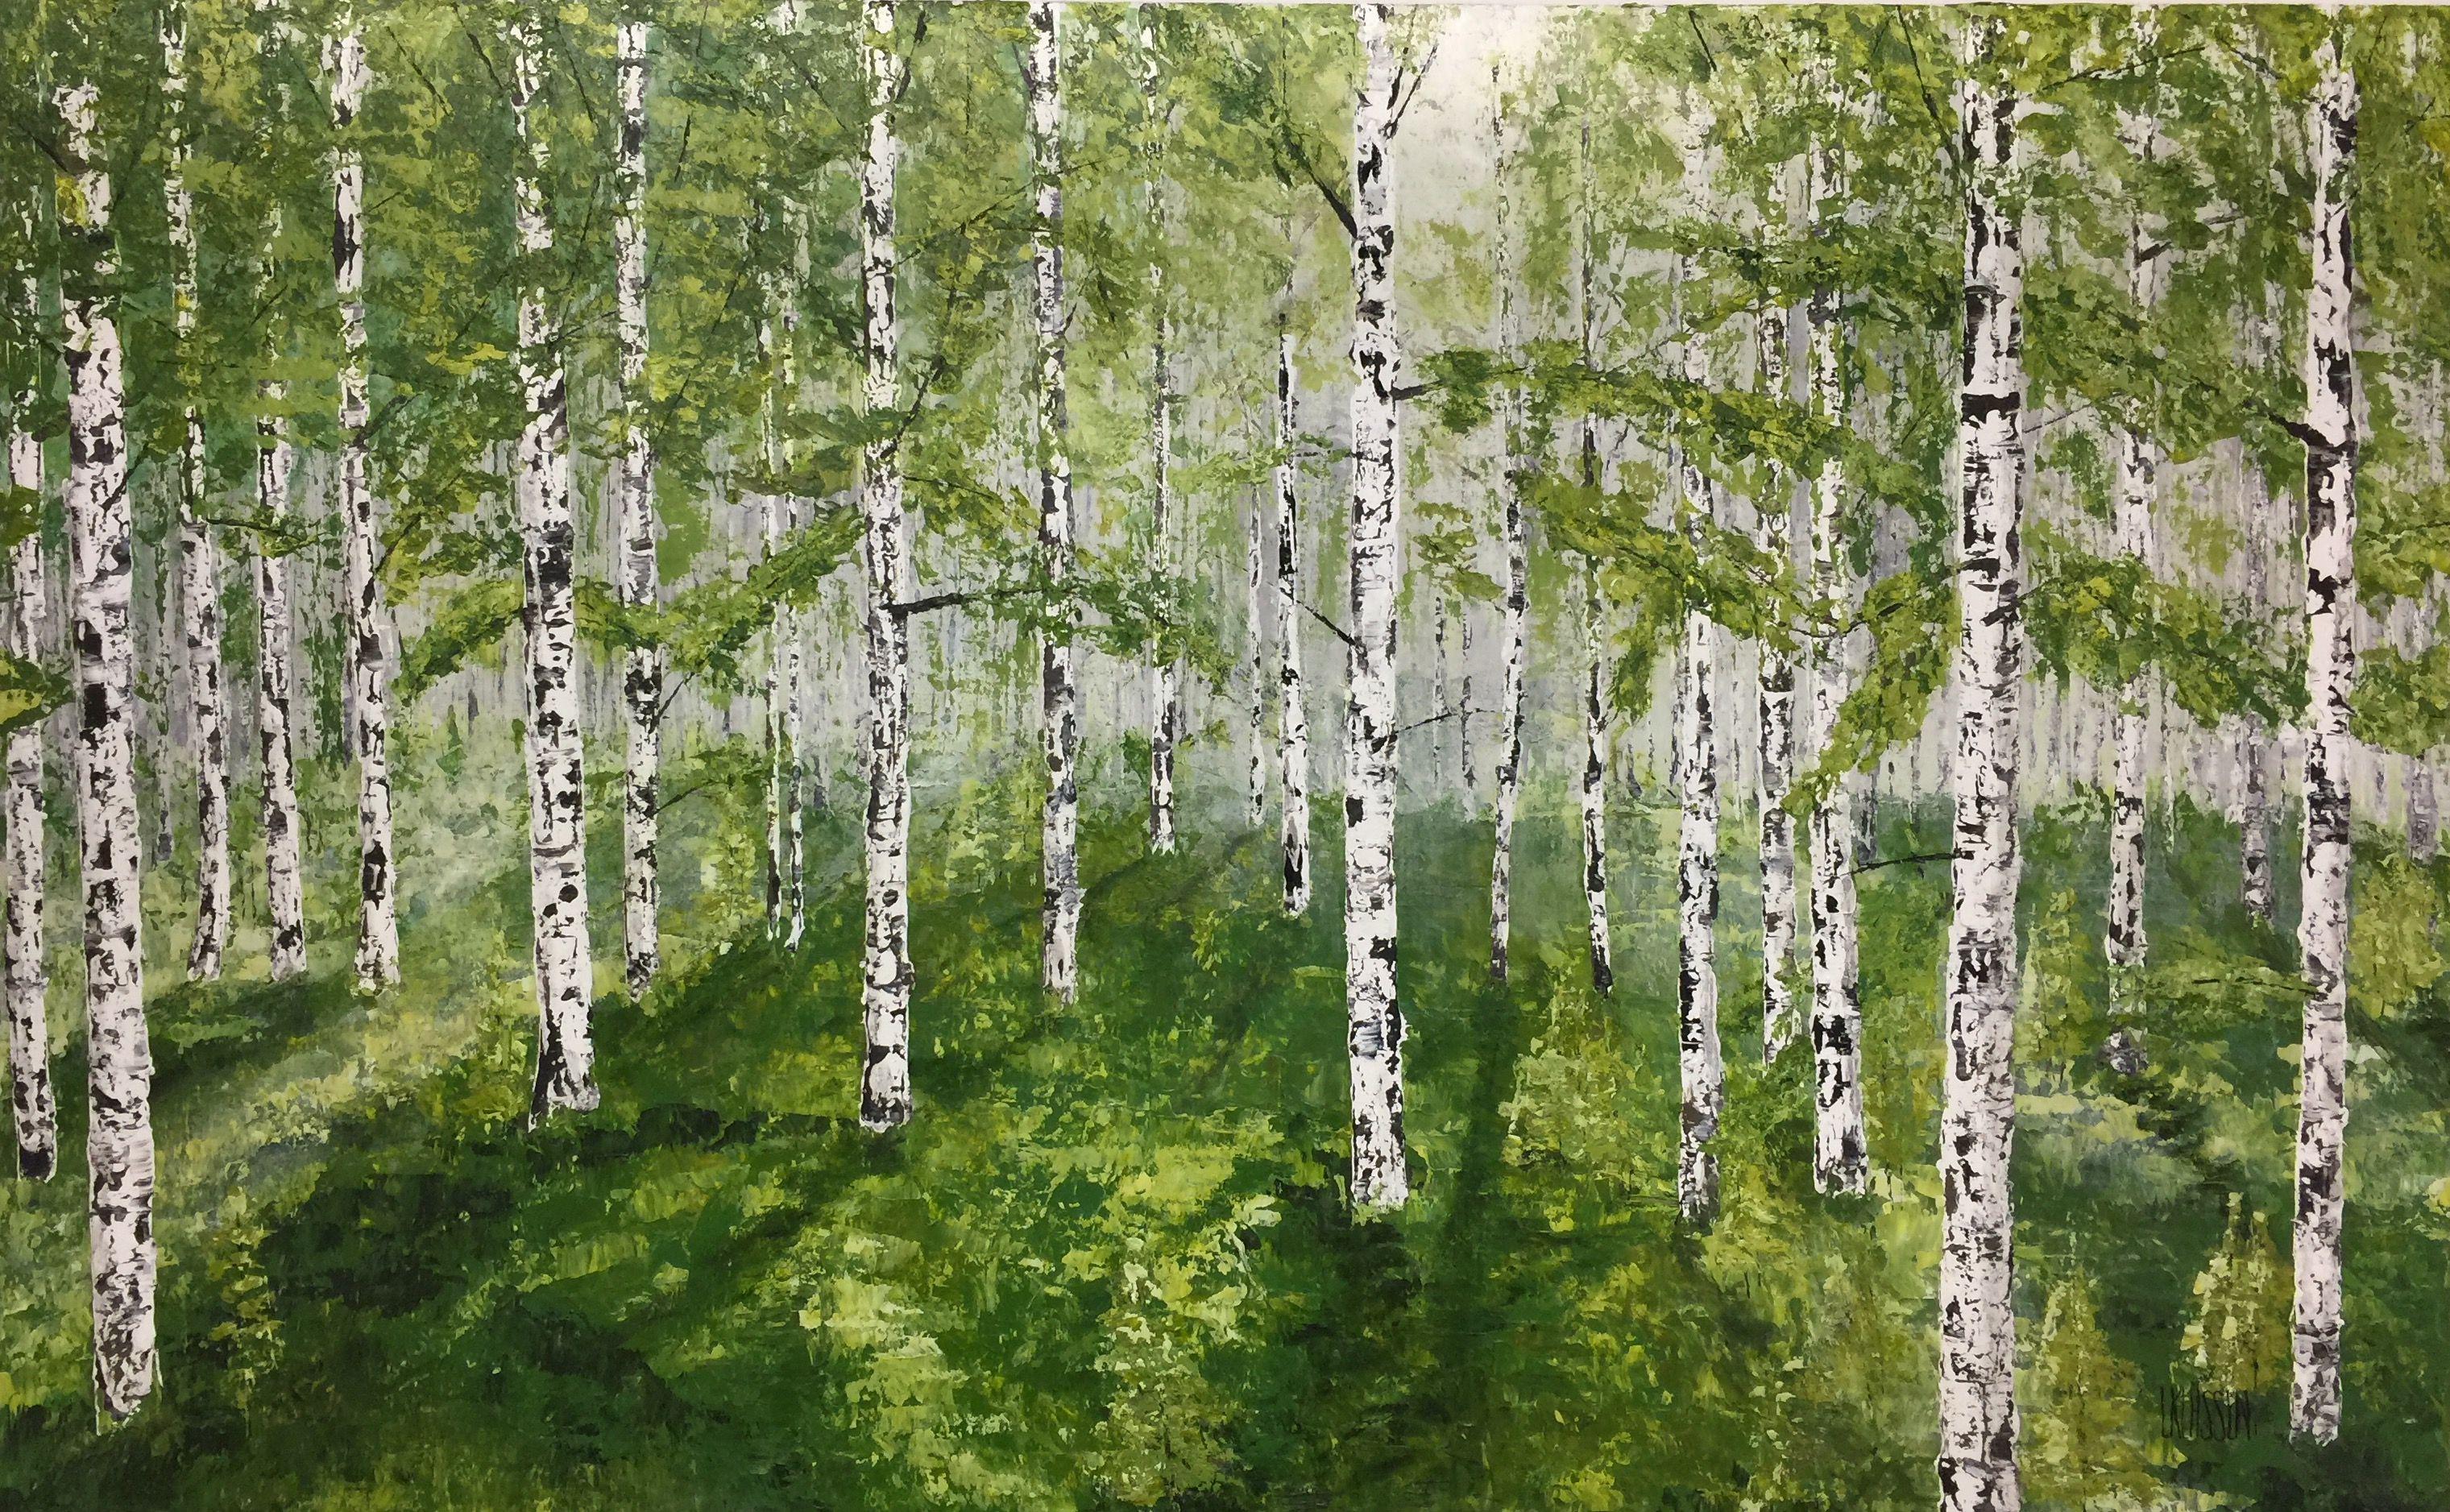 Birches in Spring Fog, Mixed Media on Canvas - Mixed Media Art by Lianna Klassen